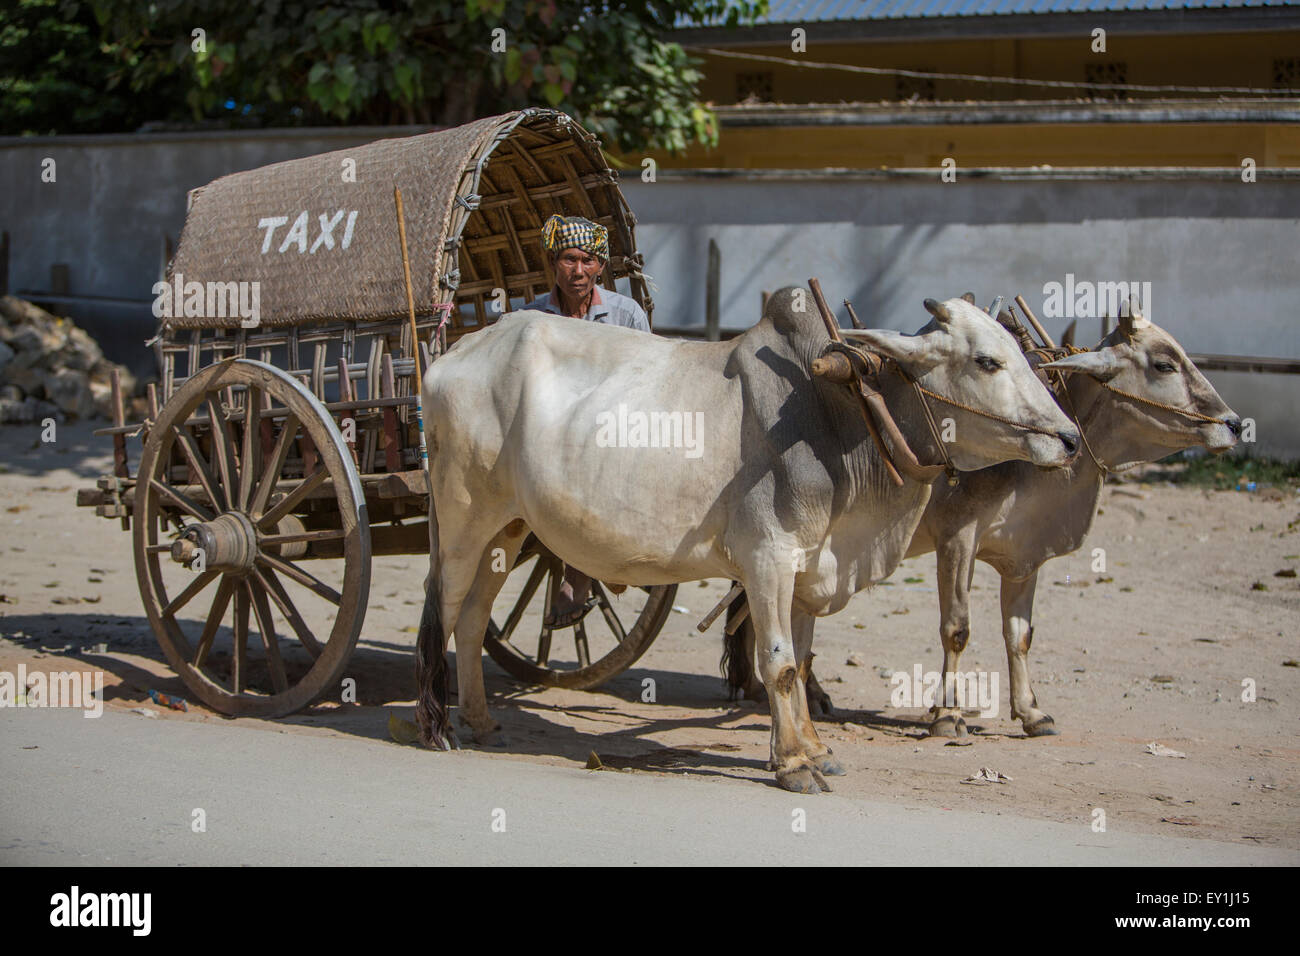 Ox cart taxi in Myanmar Stock Photo